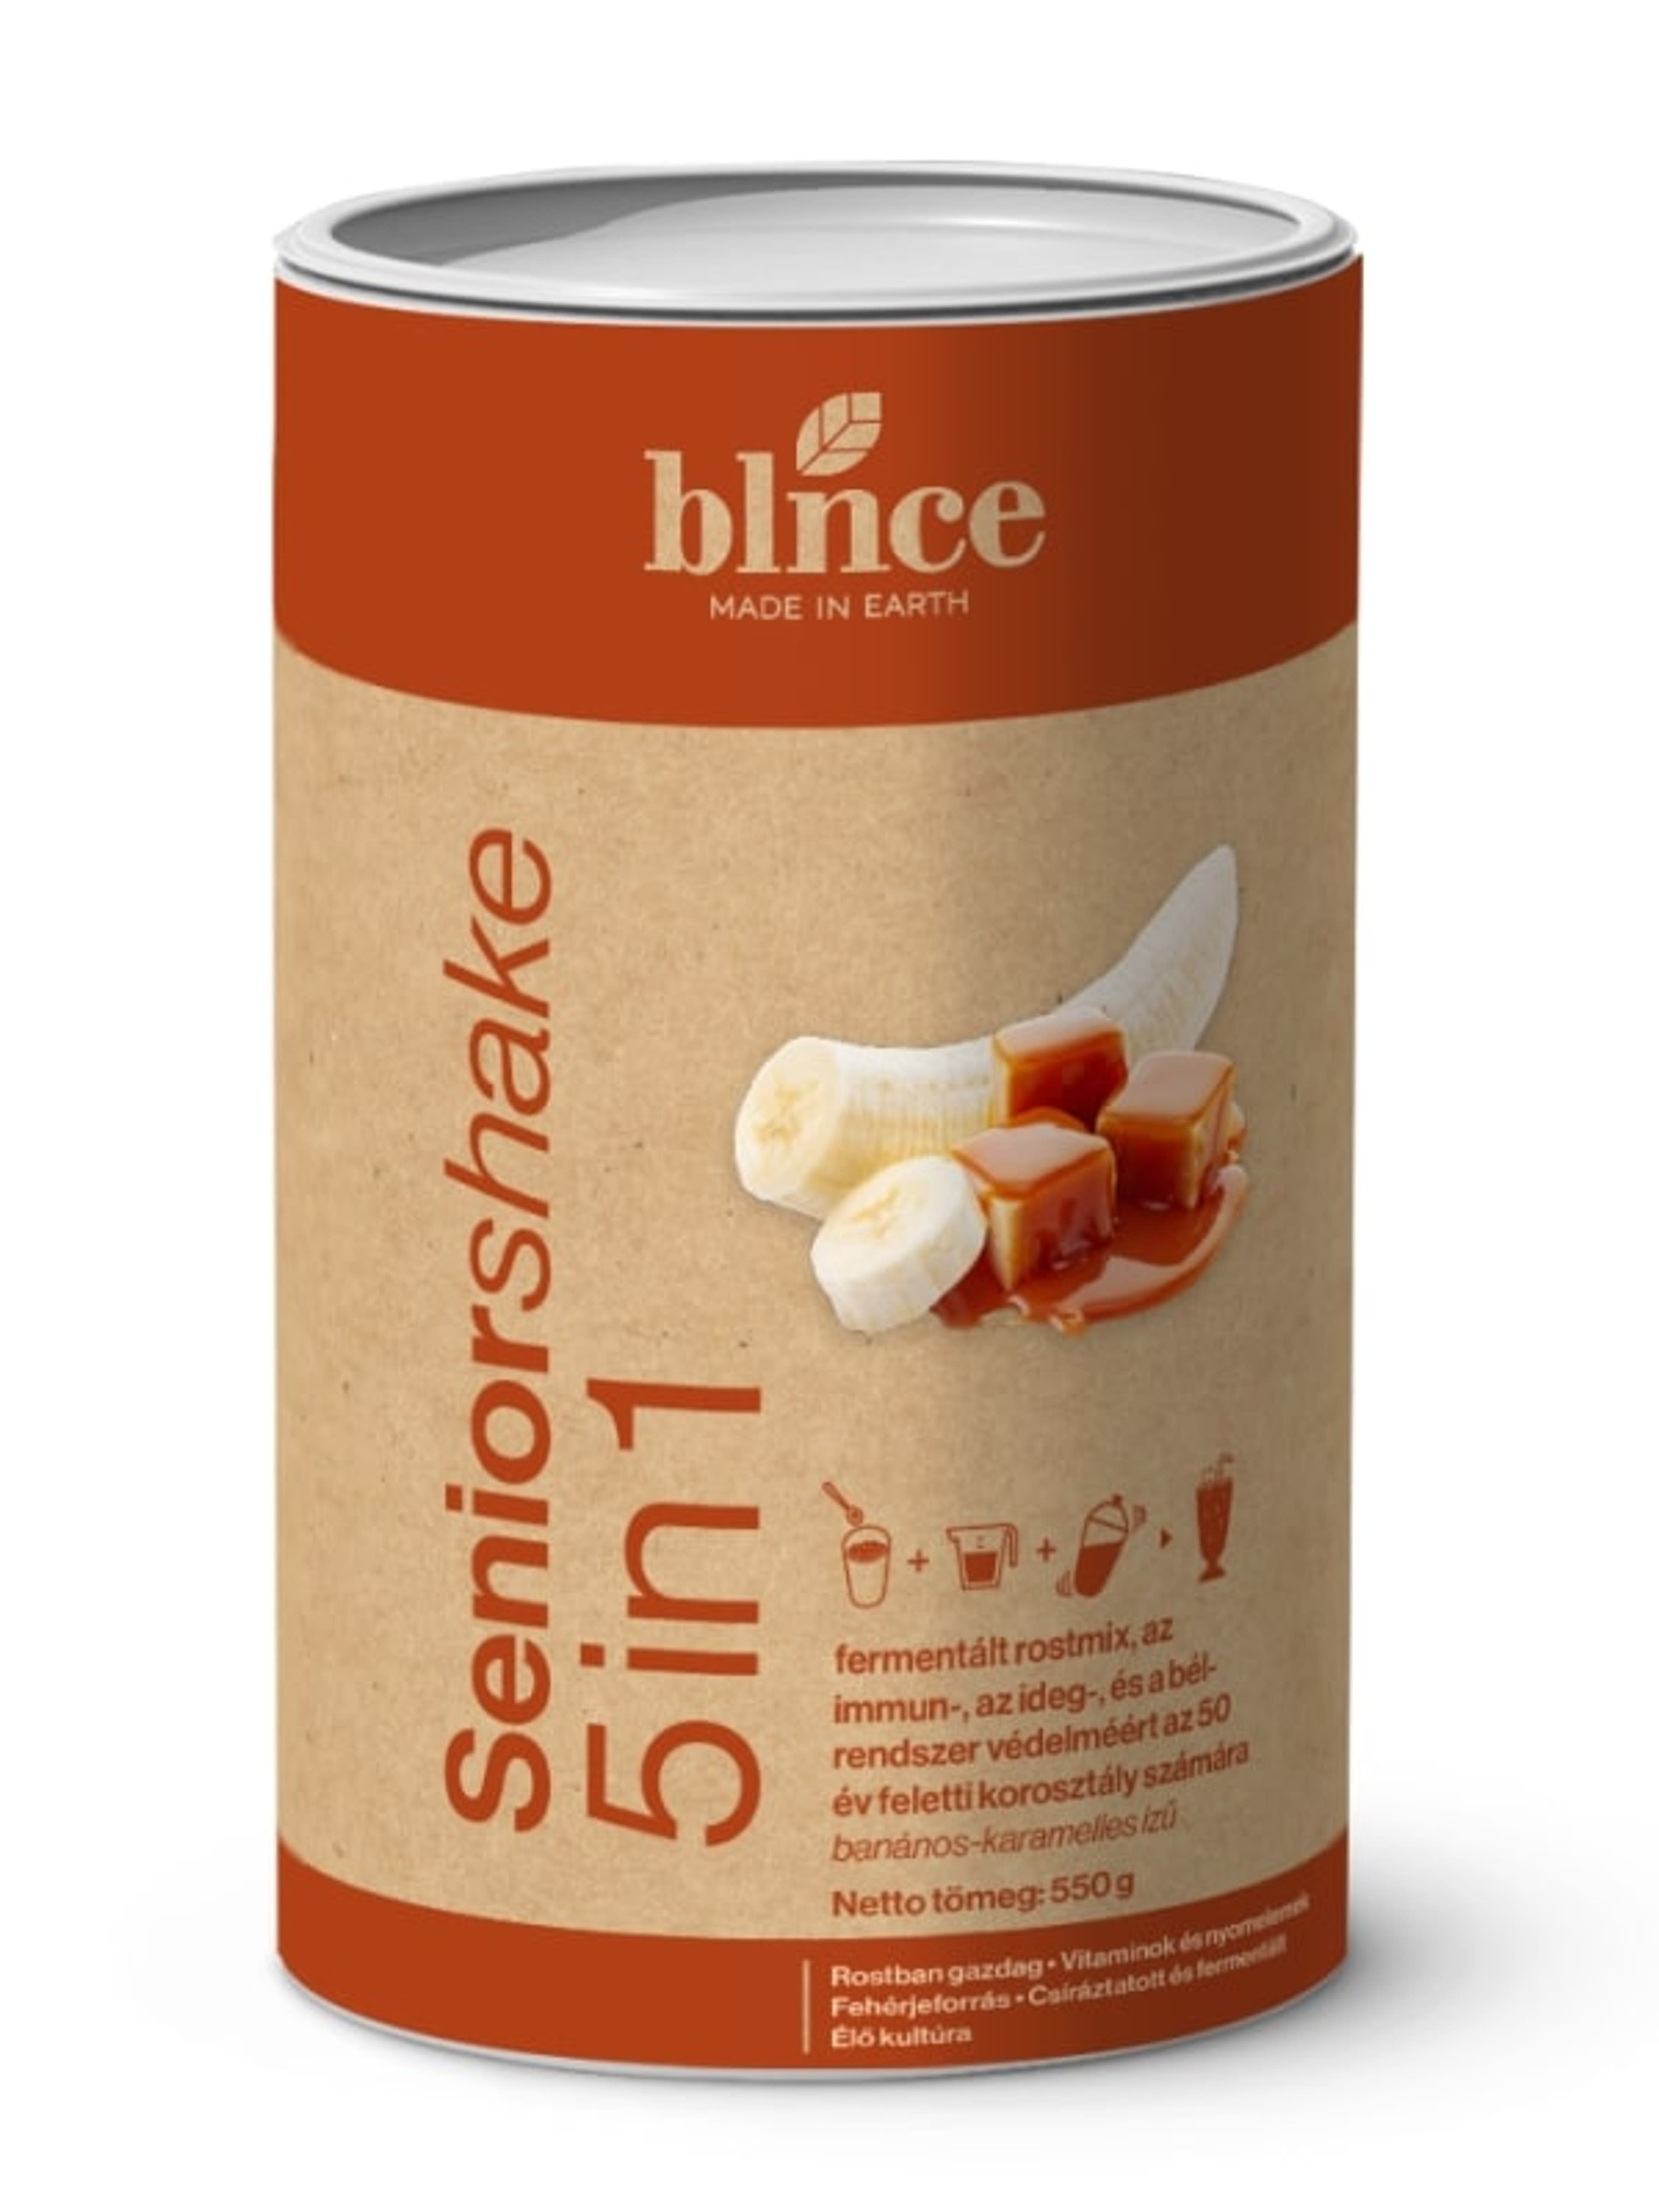 Blnce Seniorshake 5in1 - 550 g